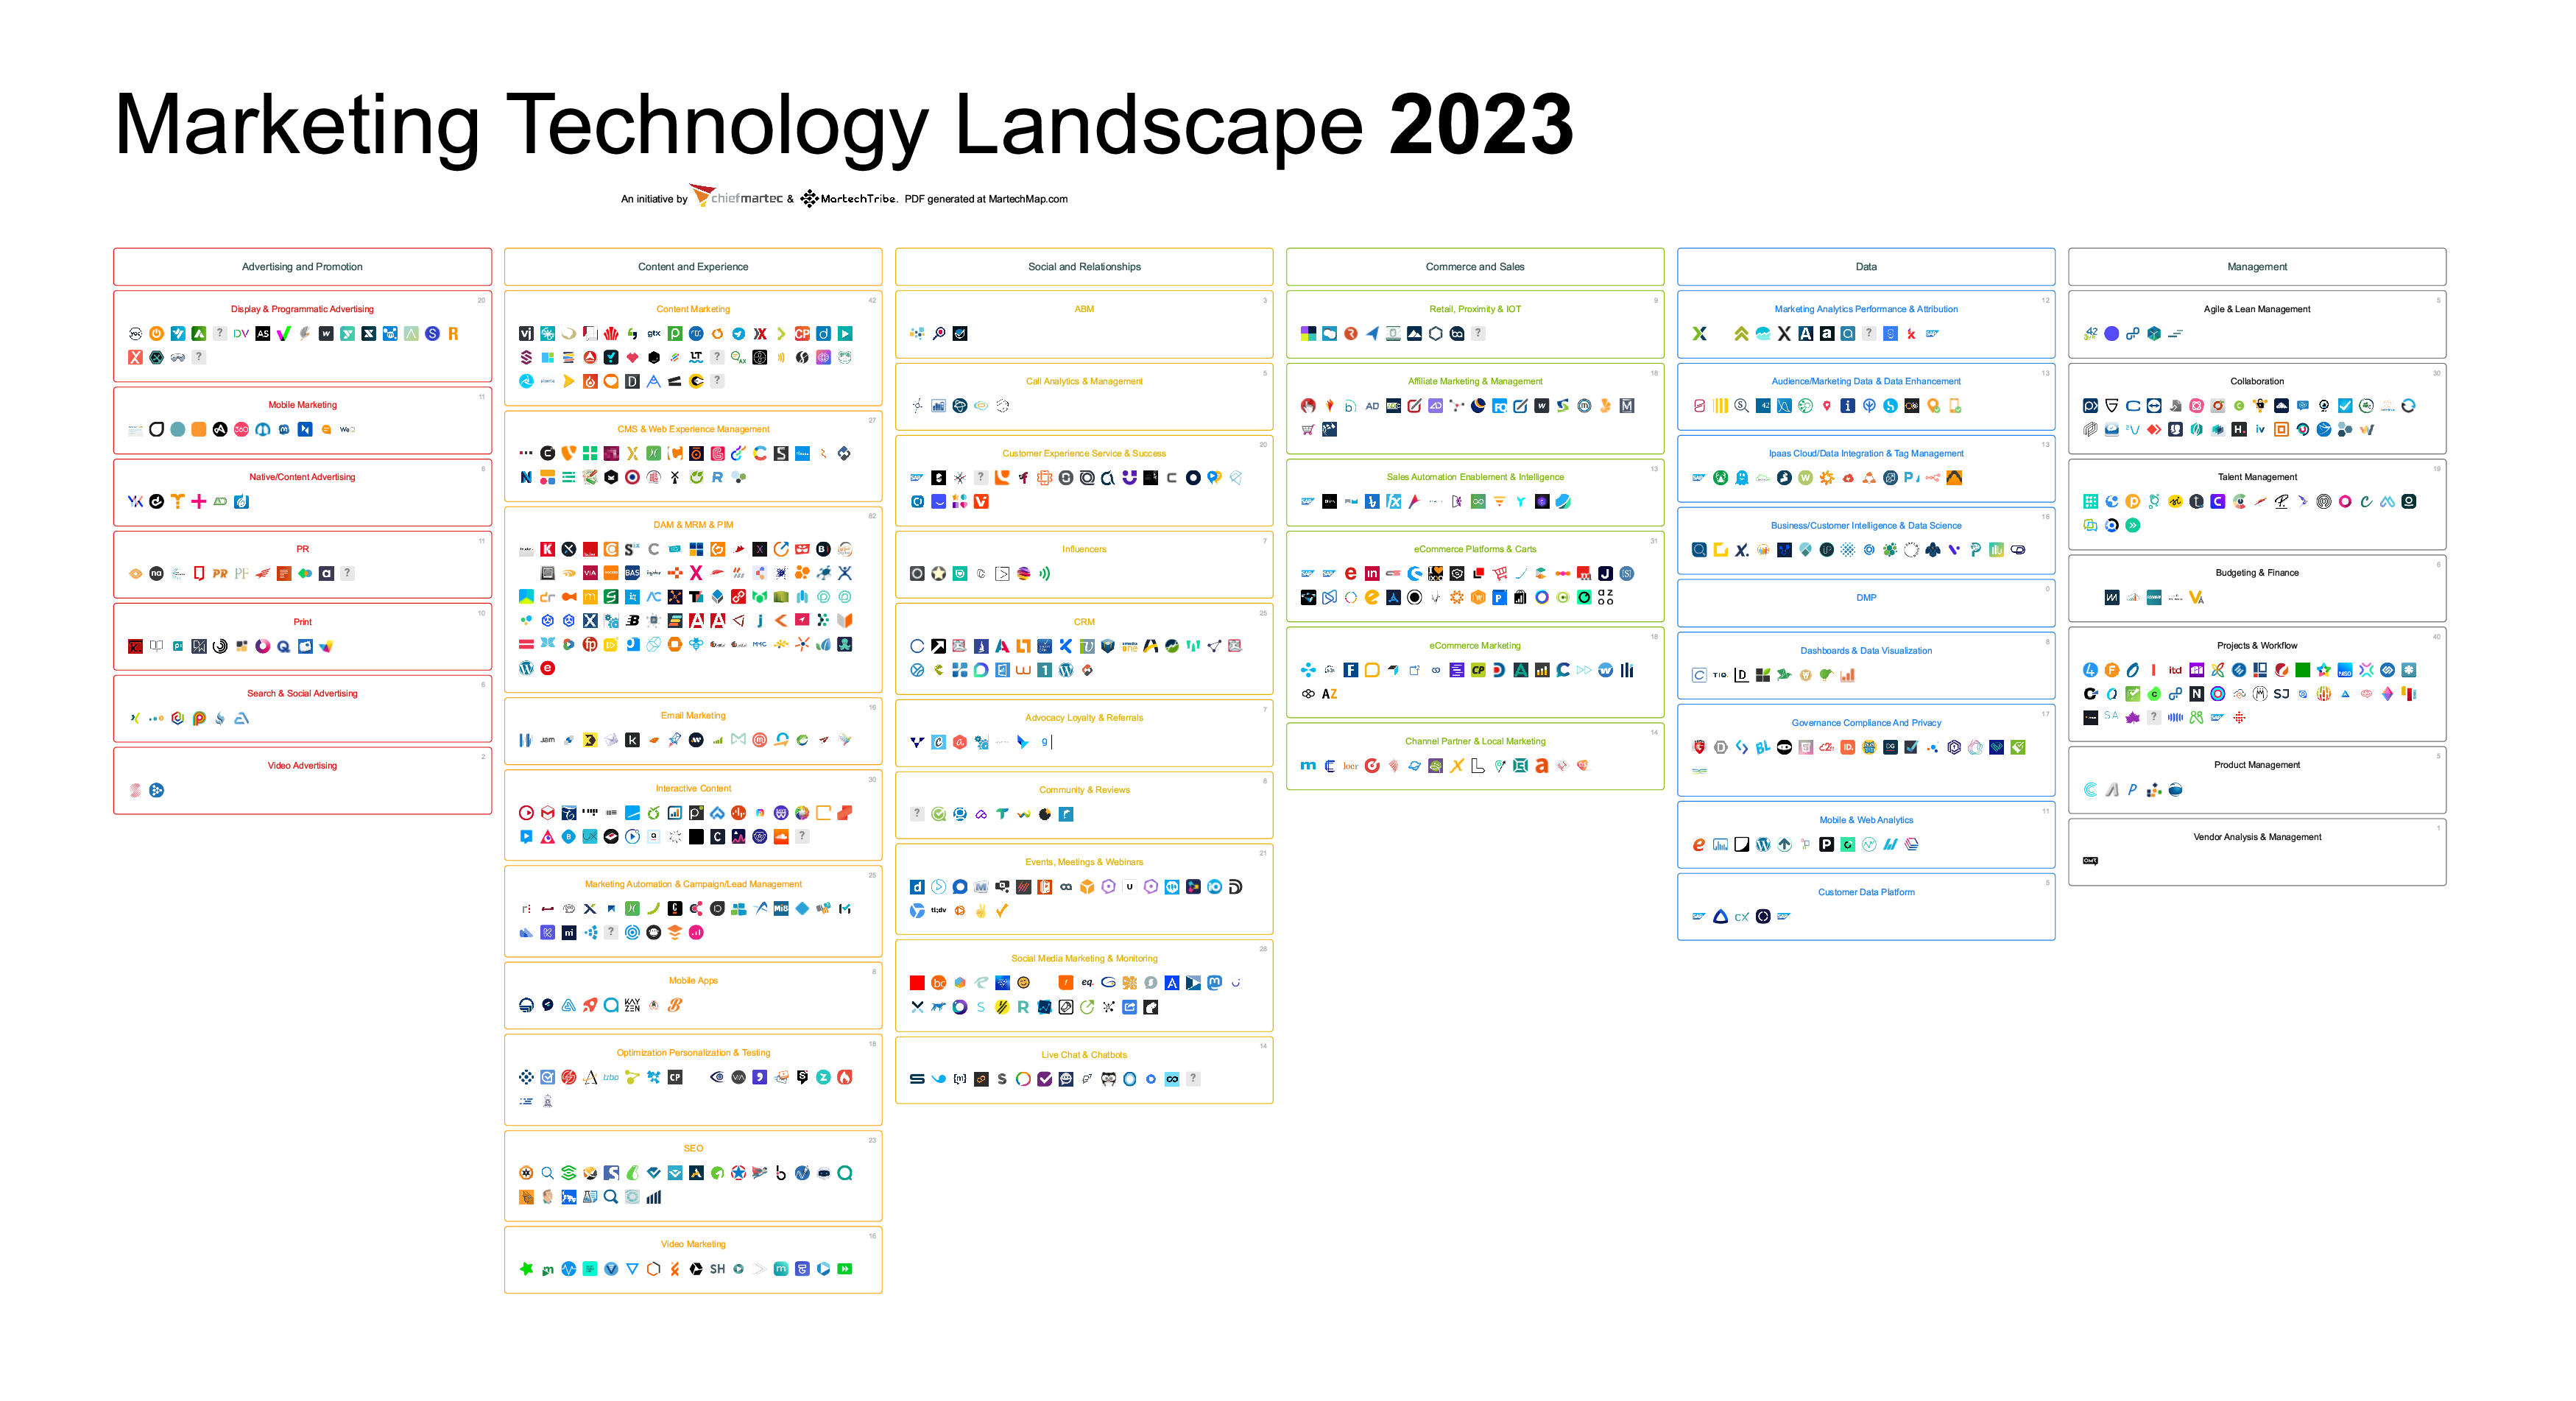 MarTech Technology Landscape 2023 